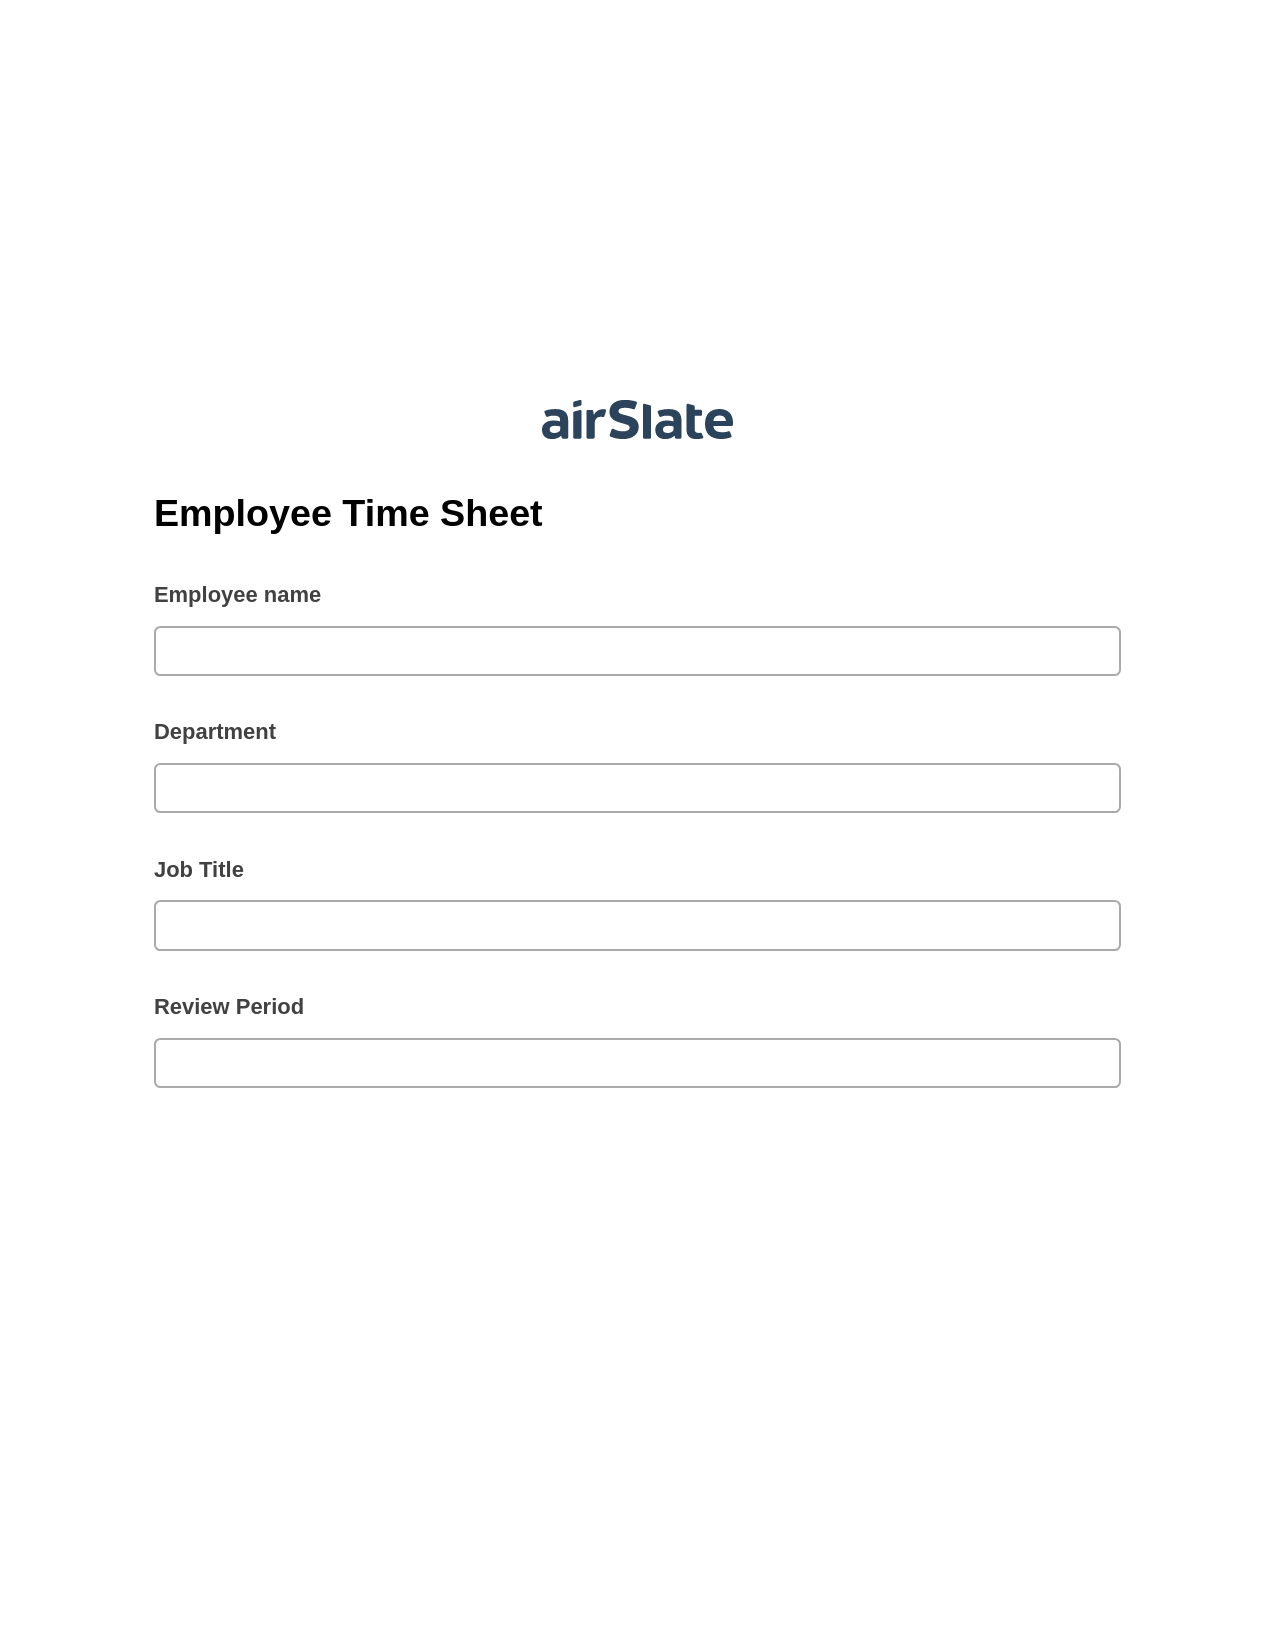 Multirole Employee Time Sheet Prefill from NetSuite records, Update Audit Trail Bot, Slack Notification Postfinish Bot